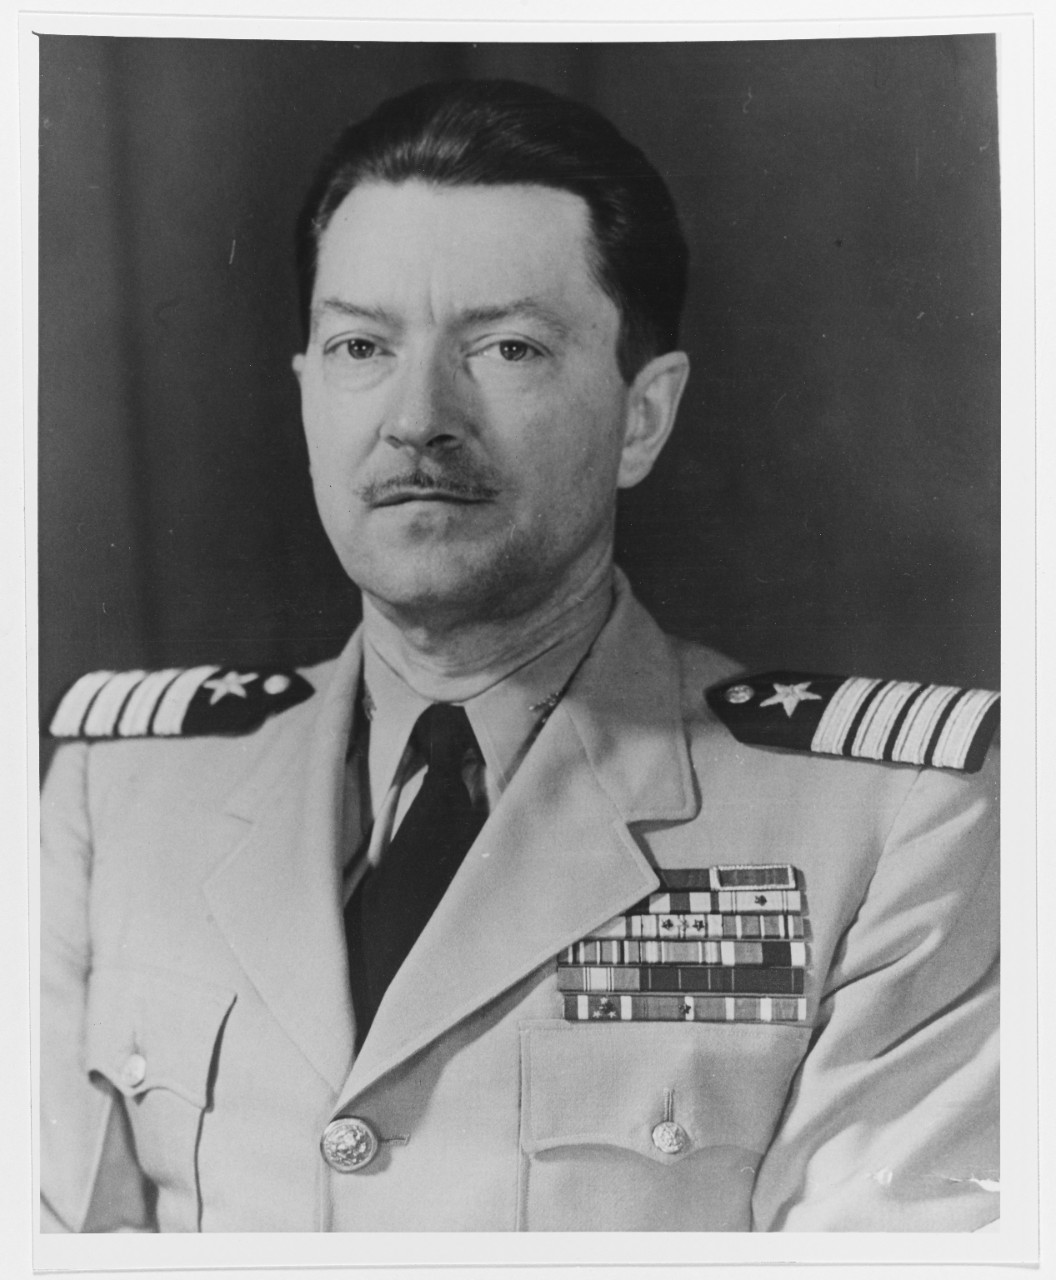 Captain Kemp Tolley, USN